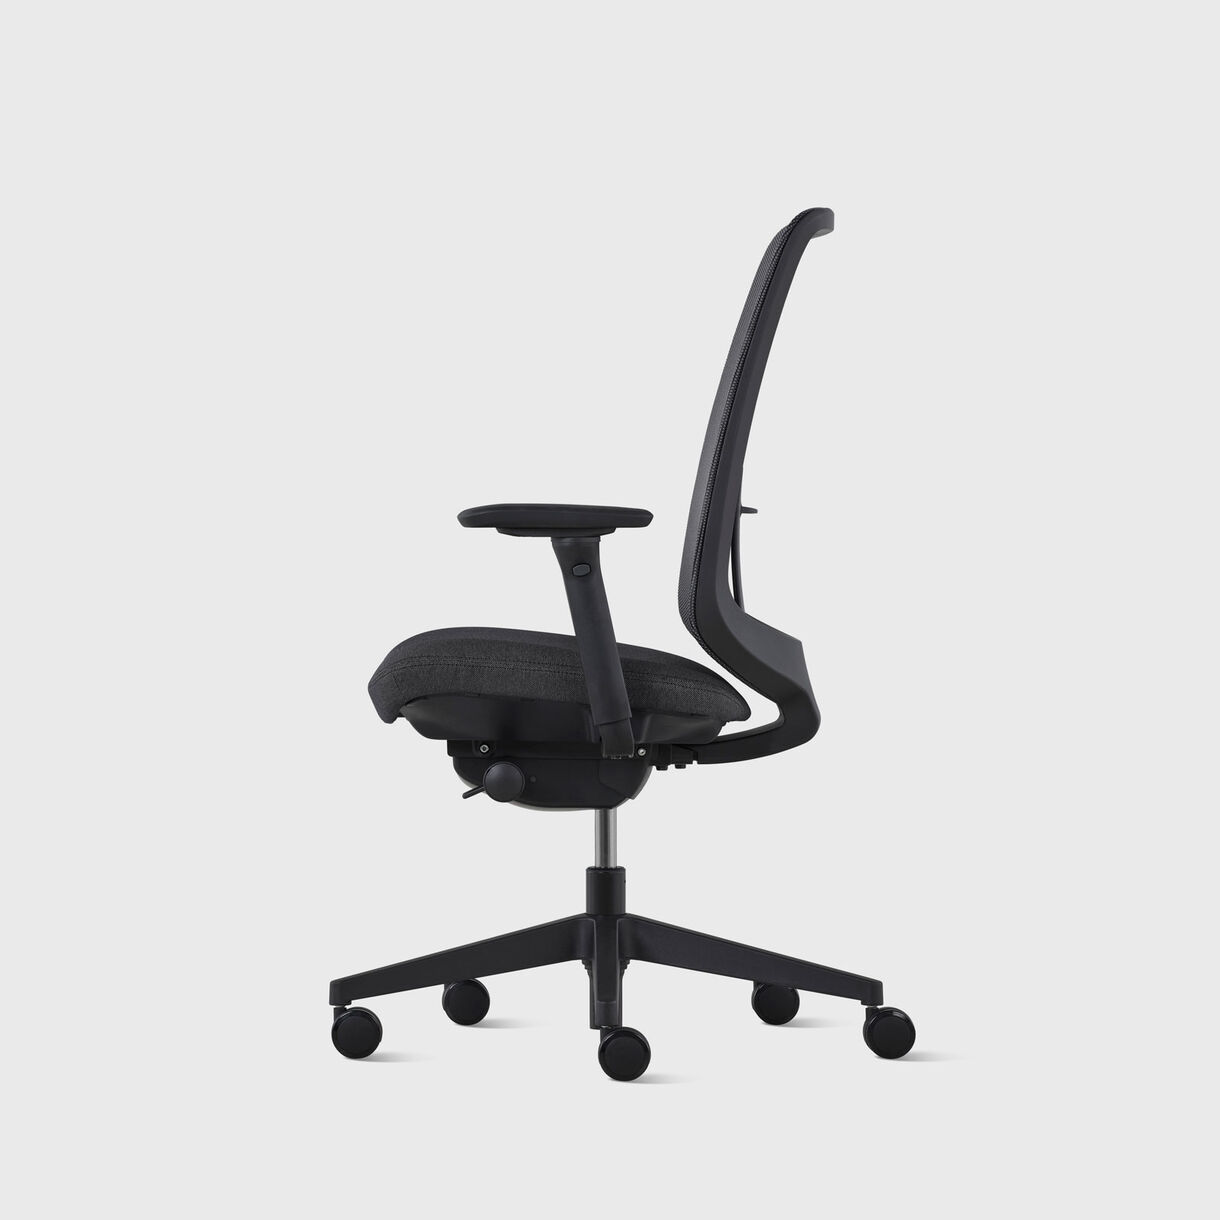 Verus Suspension Back Task Chair - Black Frame, Shale Interweave & Cinder Upholstery - Fully Adjustable Arms